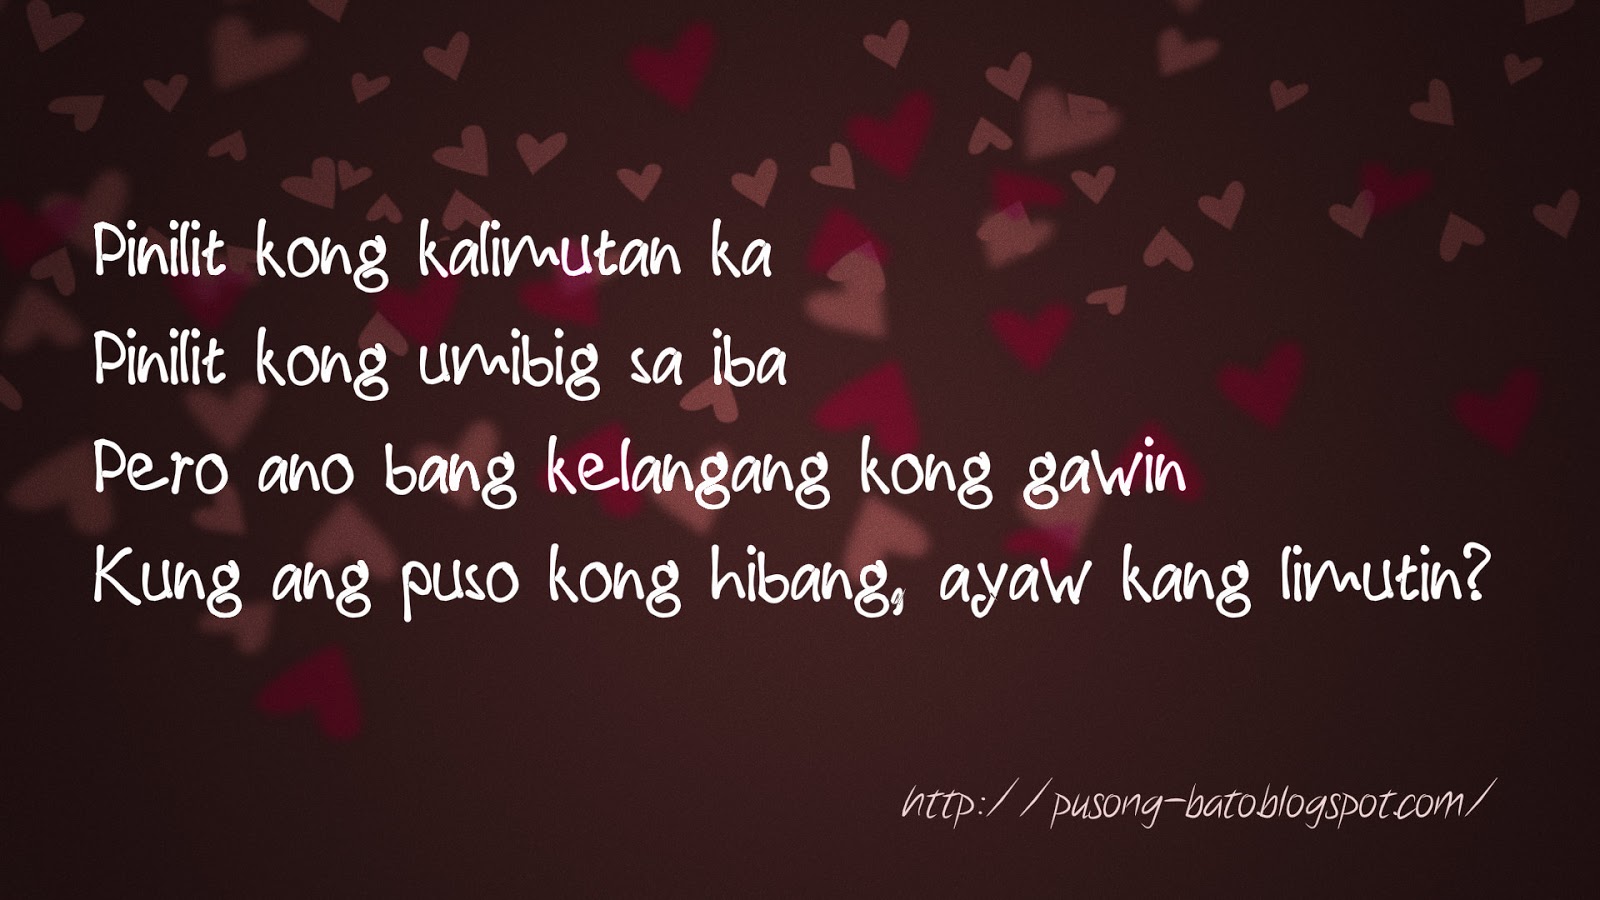 Tagalog Sad Love Quotes Lyrics Pag nalawayan ko na at nagpa laway pa sa iba